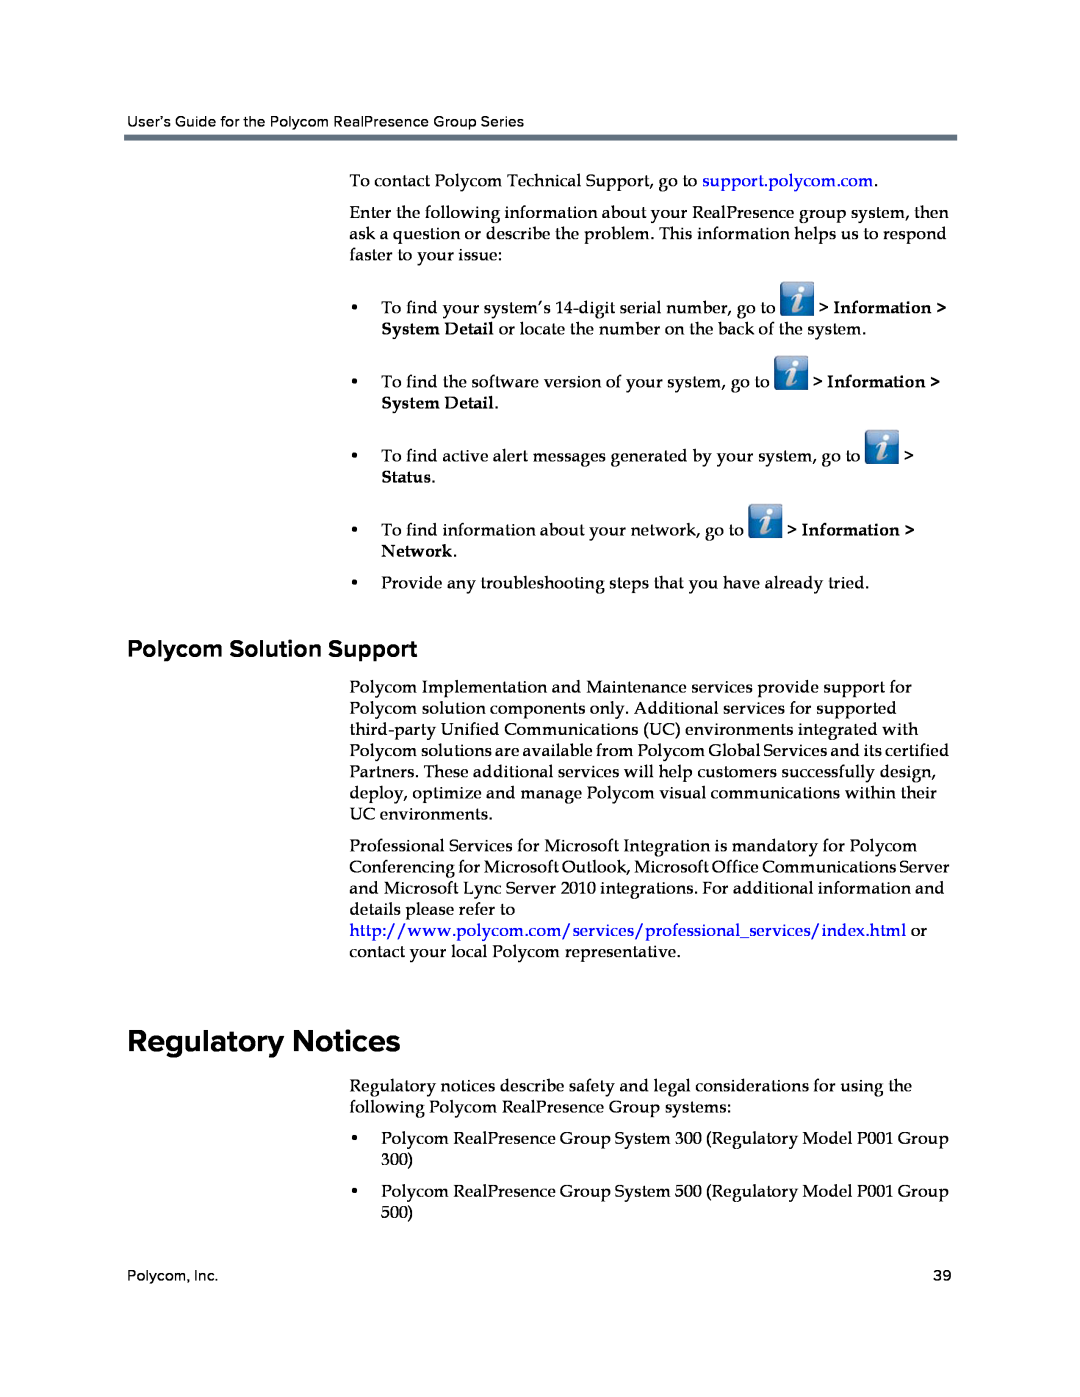 Polycom P001 manual Regulatory Notices, Polycom Solution Support 